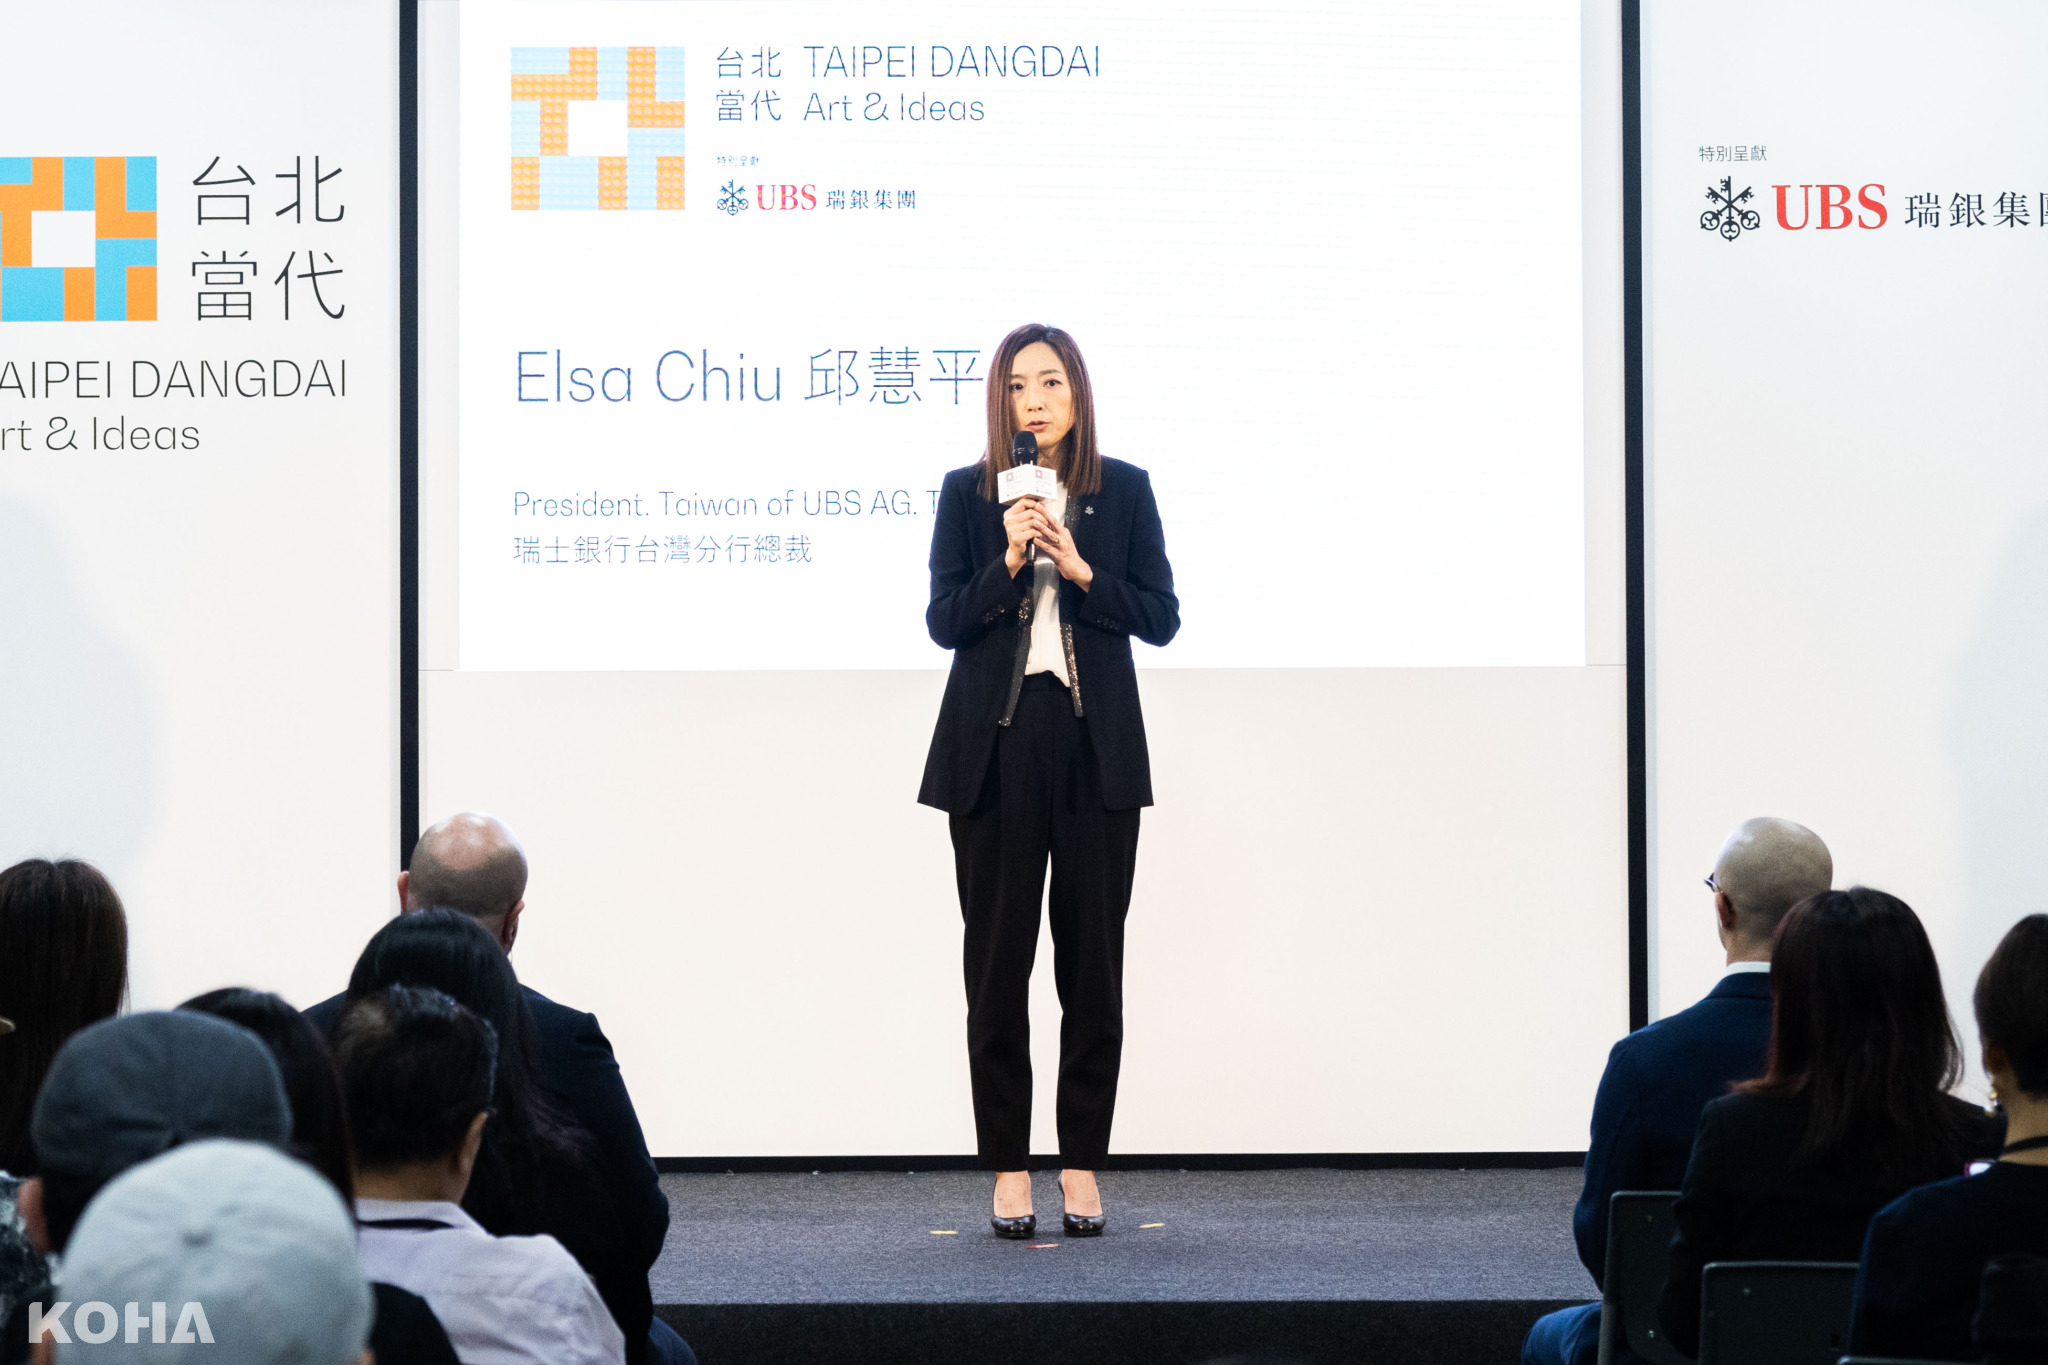 瑞士銀行台灣分行總裁邱慧平 Elsa Chiu President Taiwan of UBS AG Taipei Branch. Image Courtesy of Taipei Dangdai